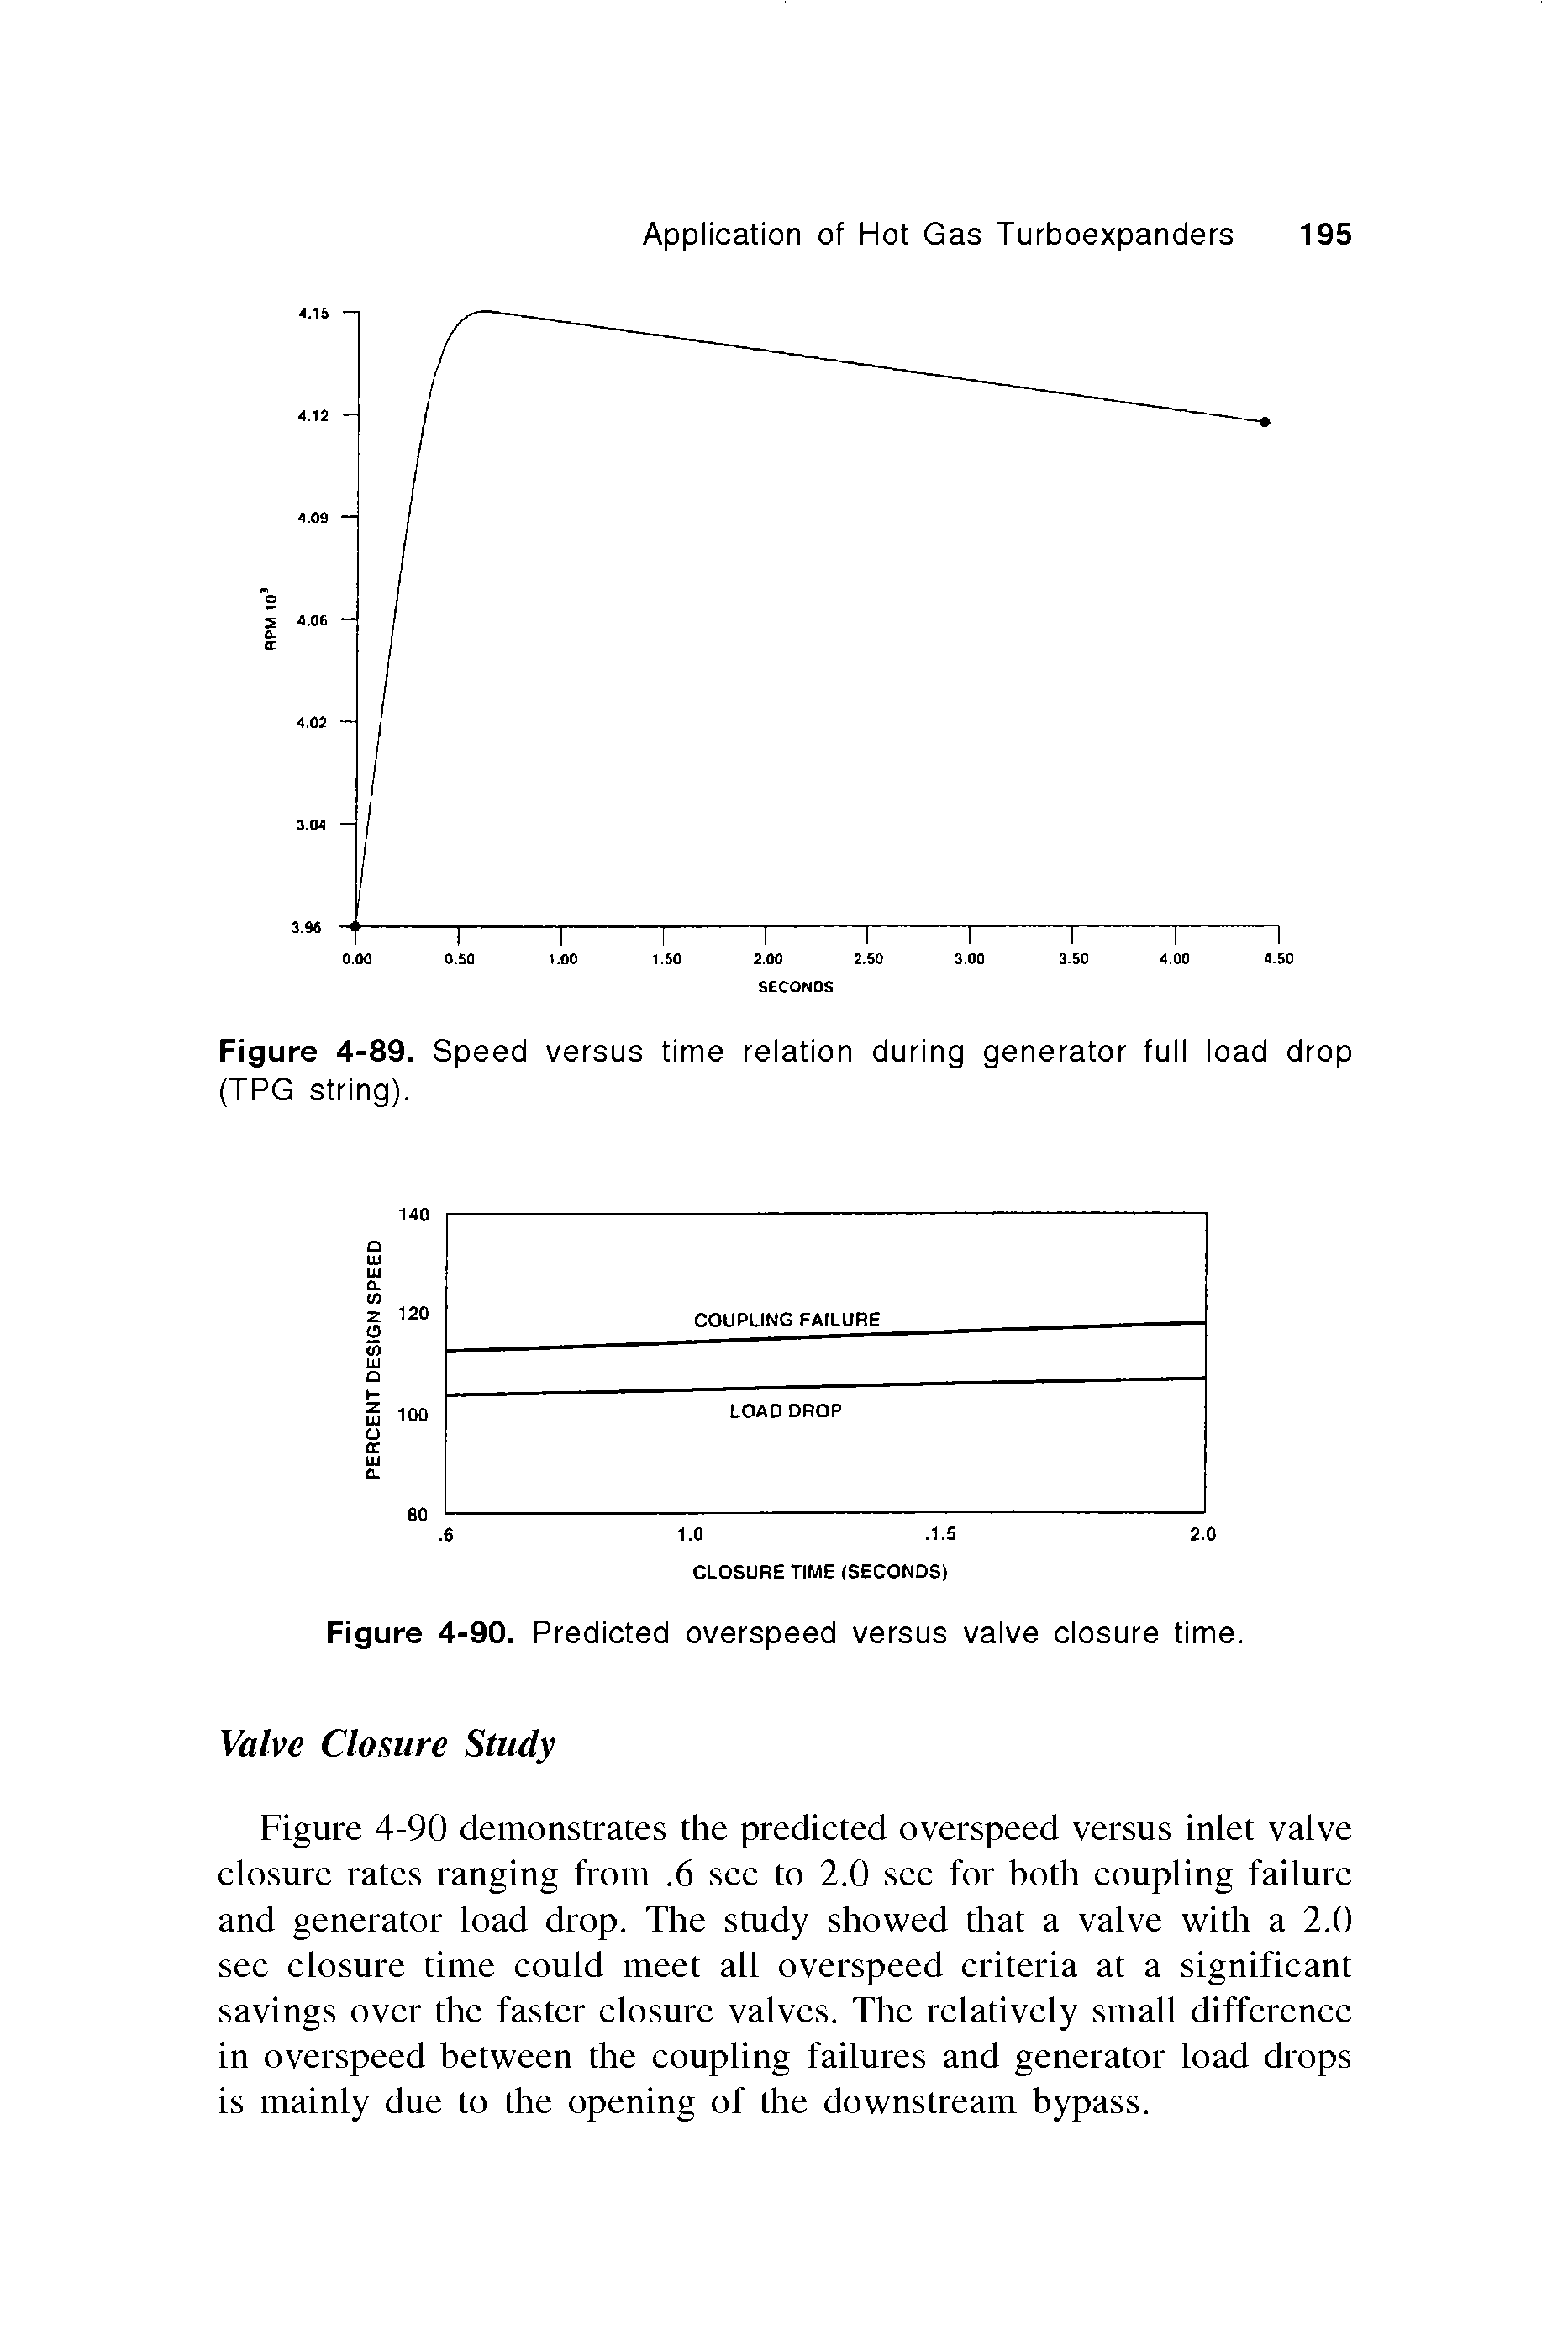 Figure 4-90. Predicted overspeed versus valve closure time.